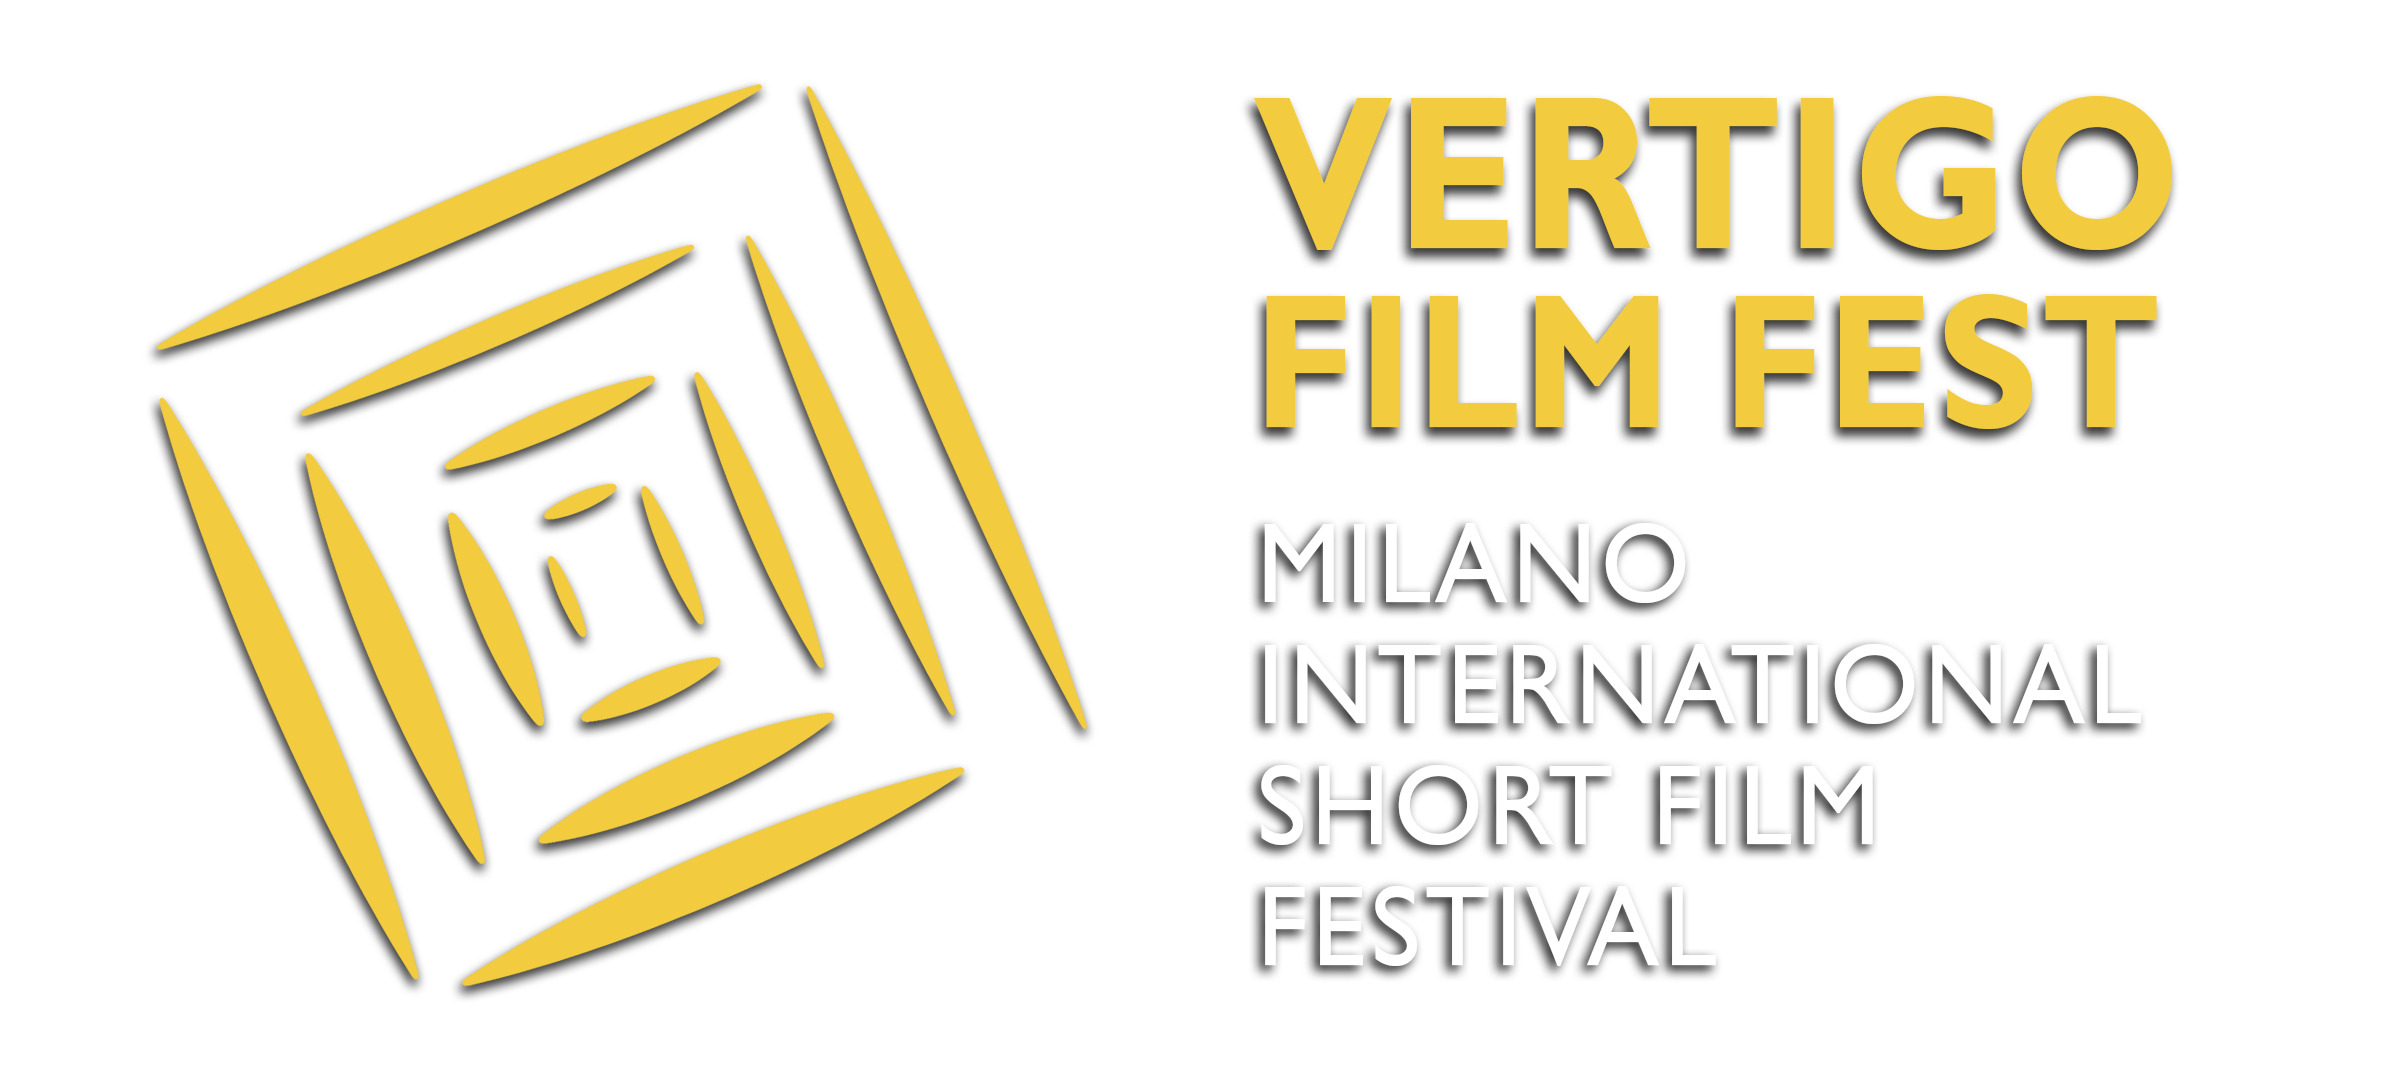 Vertigo Film Fest. Milan International Short Film Festival